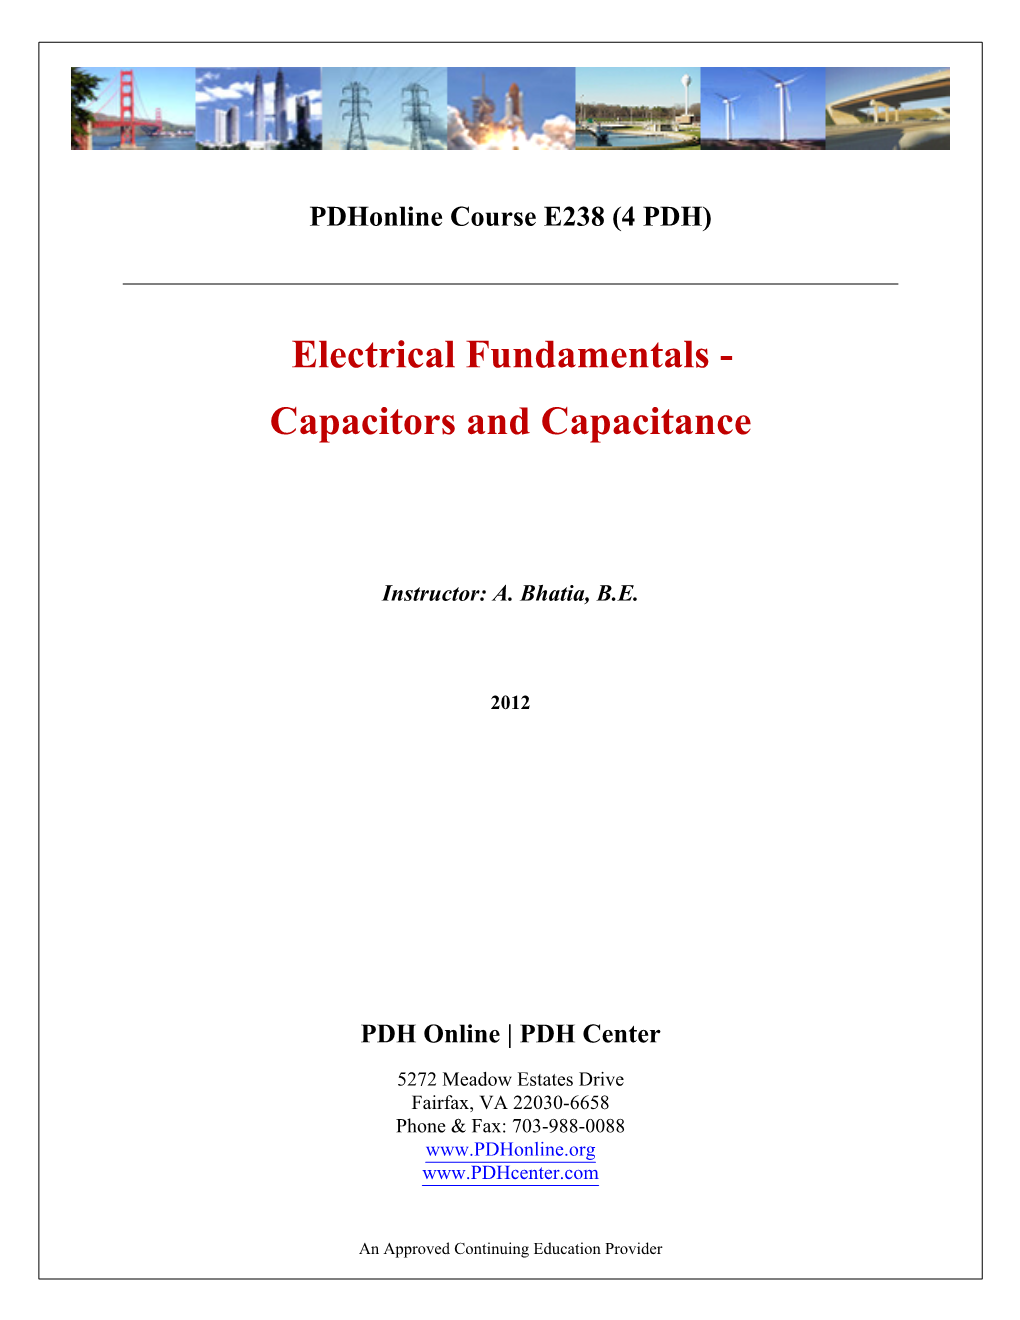 Electrical Fundamentals - Capacitors and Capacitance